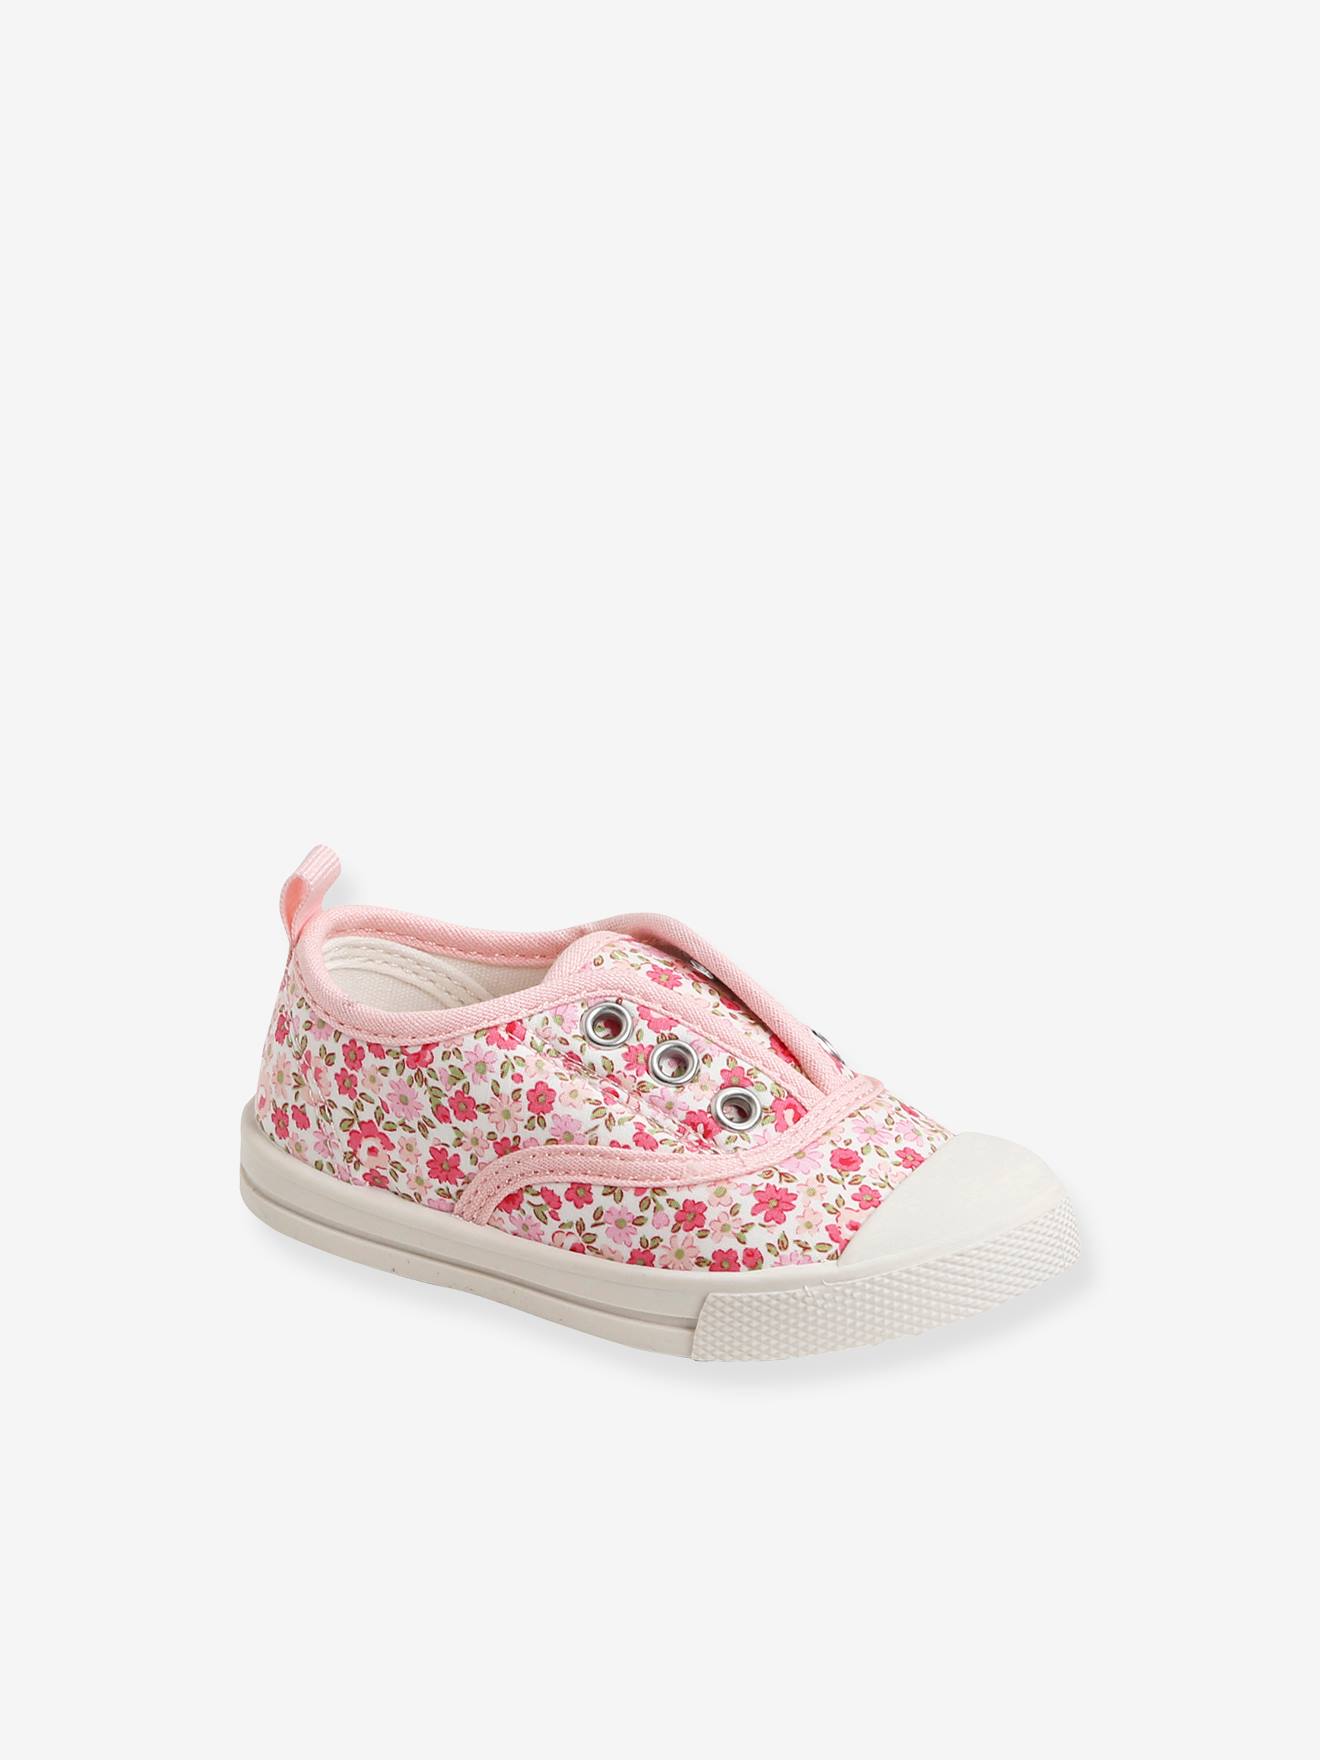 Baby Schuhe Babyschuhe Lauflernschuhe Krabbelschuhe Sneakers rosa weiß blau 